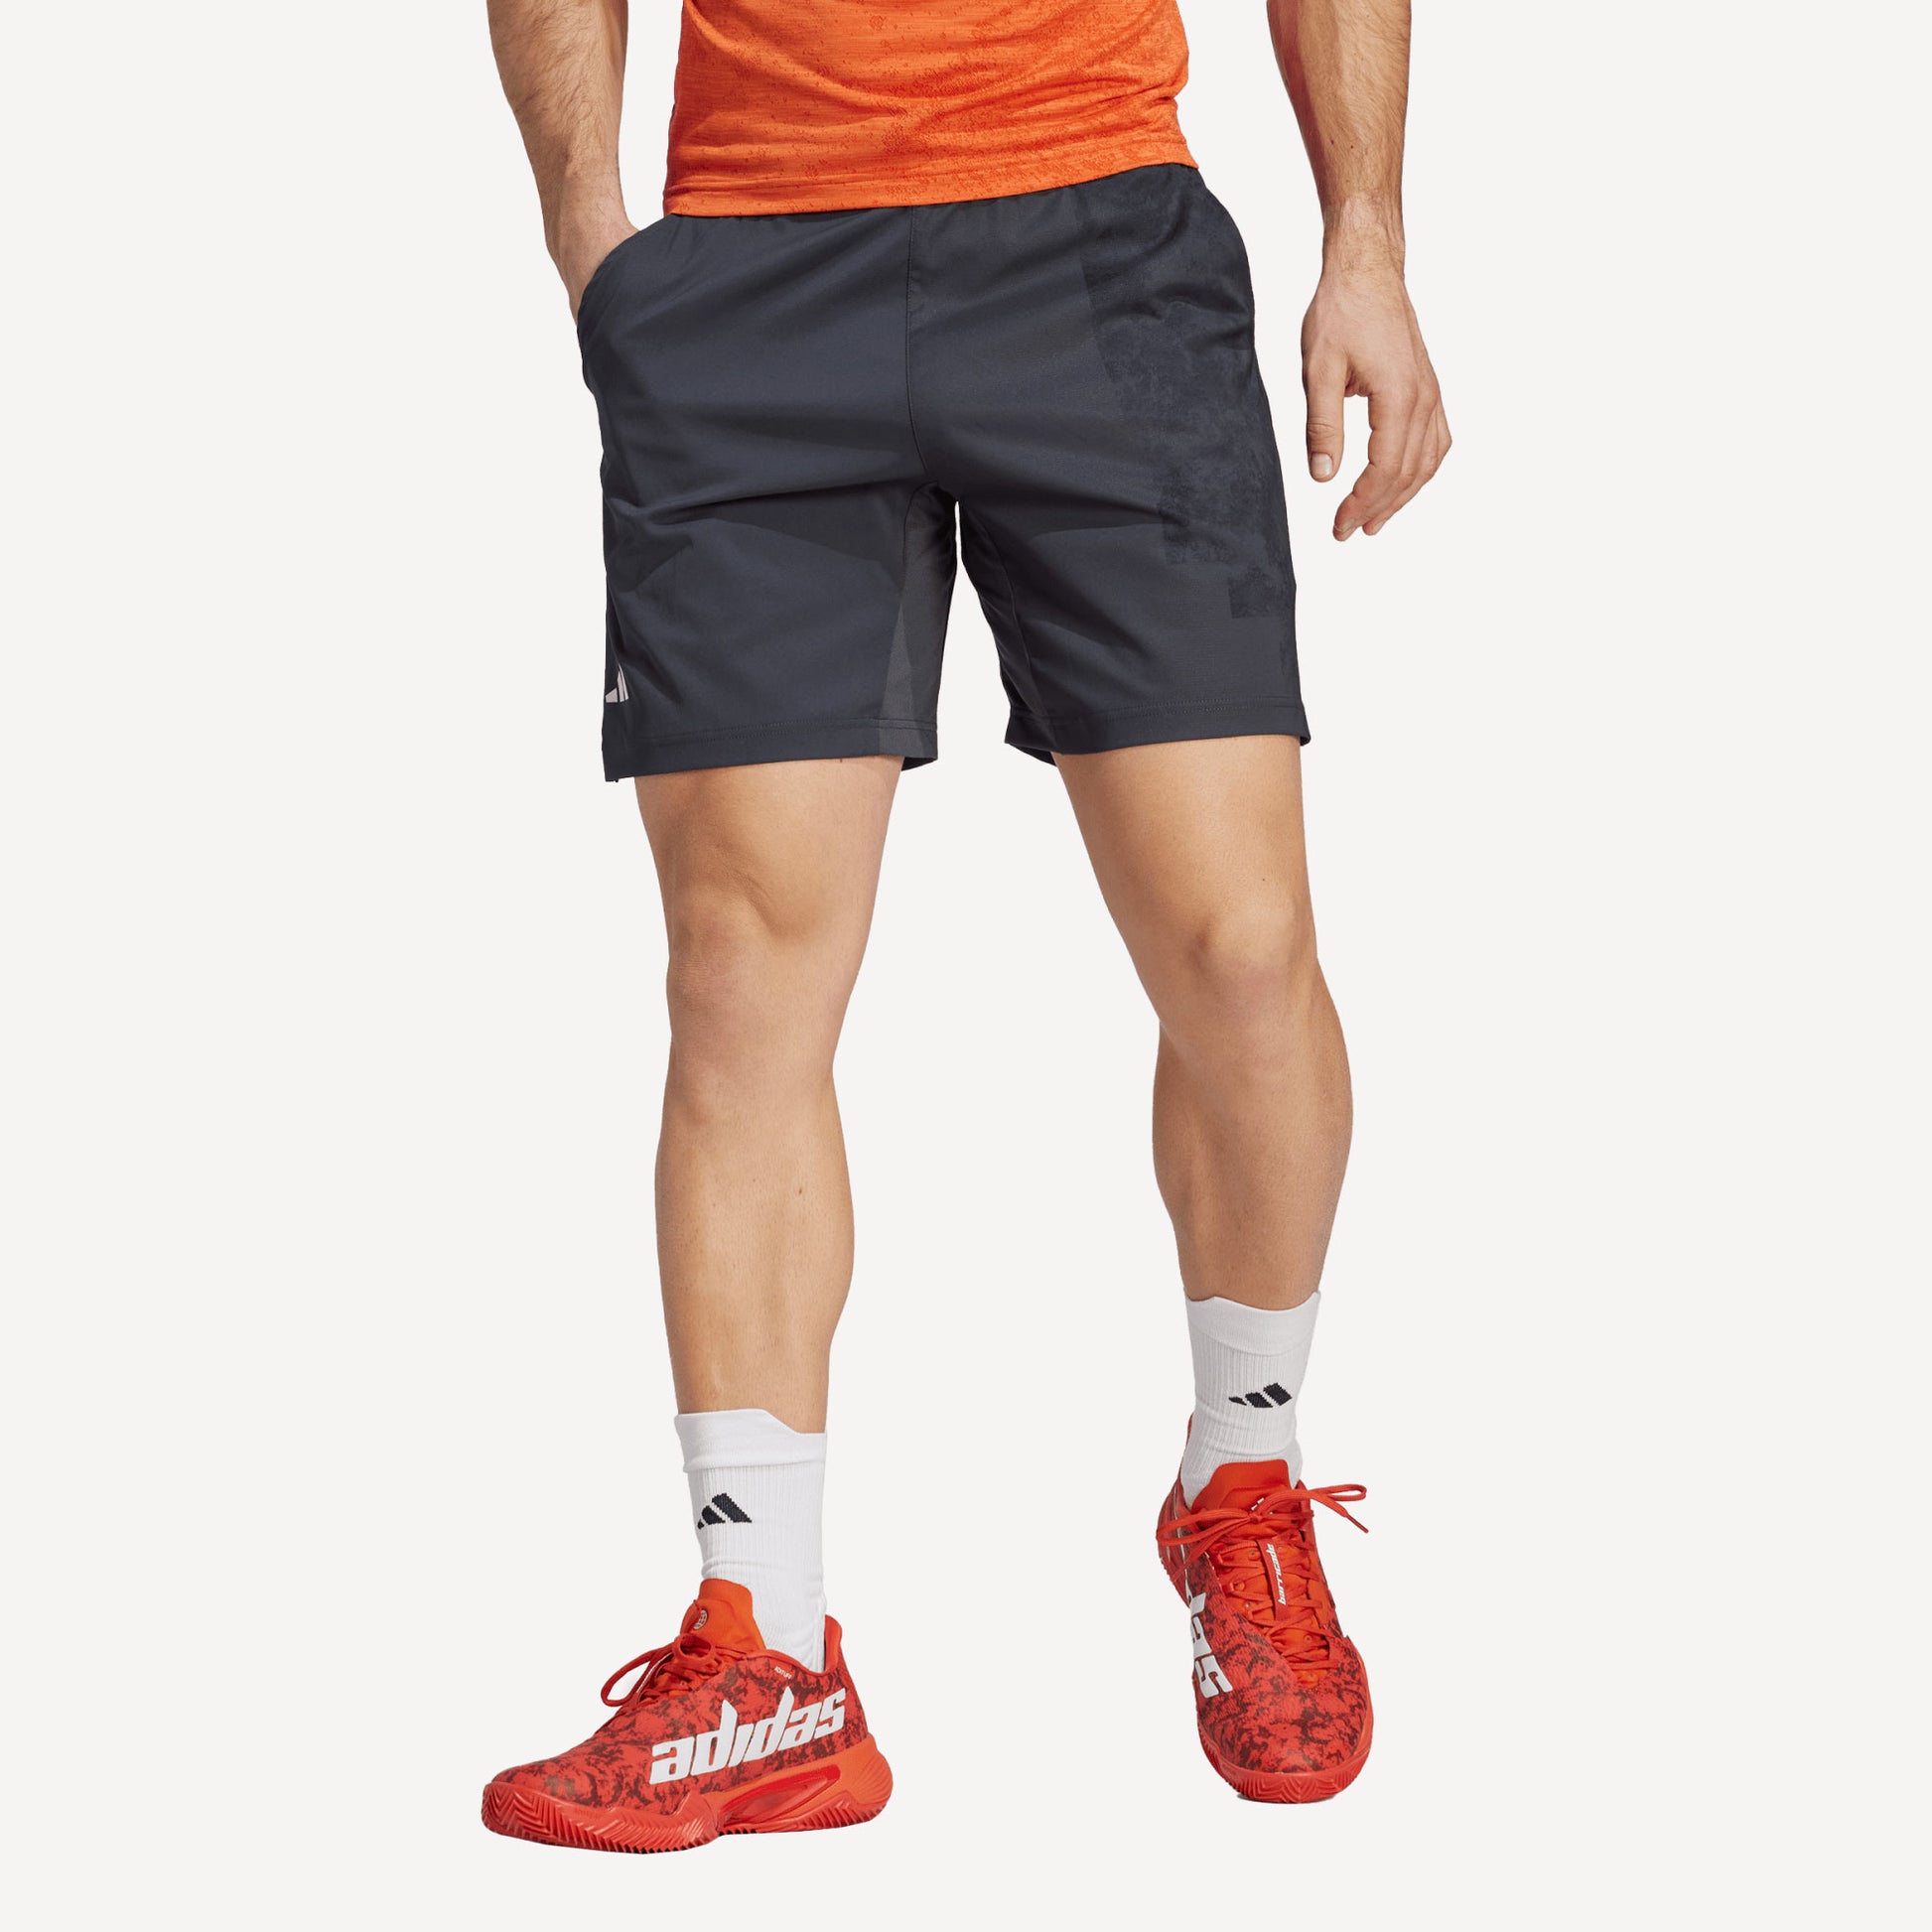 adidas Paris Ergo Men's 7-Inch Tennis Shorts Grey (1)